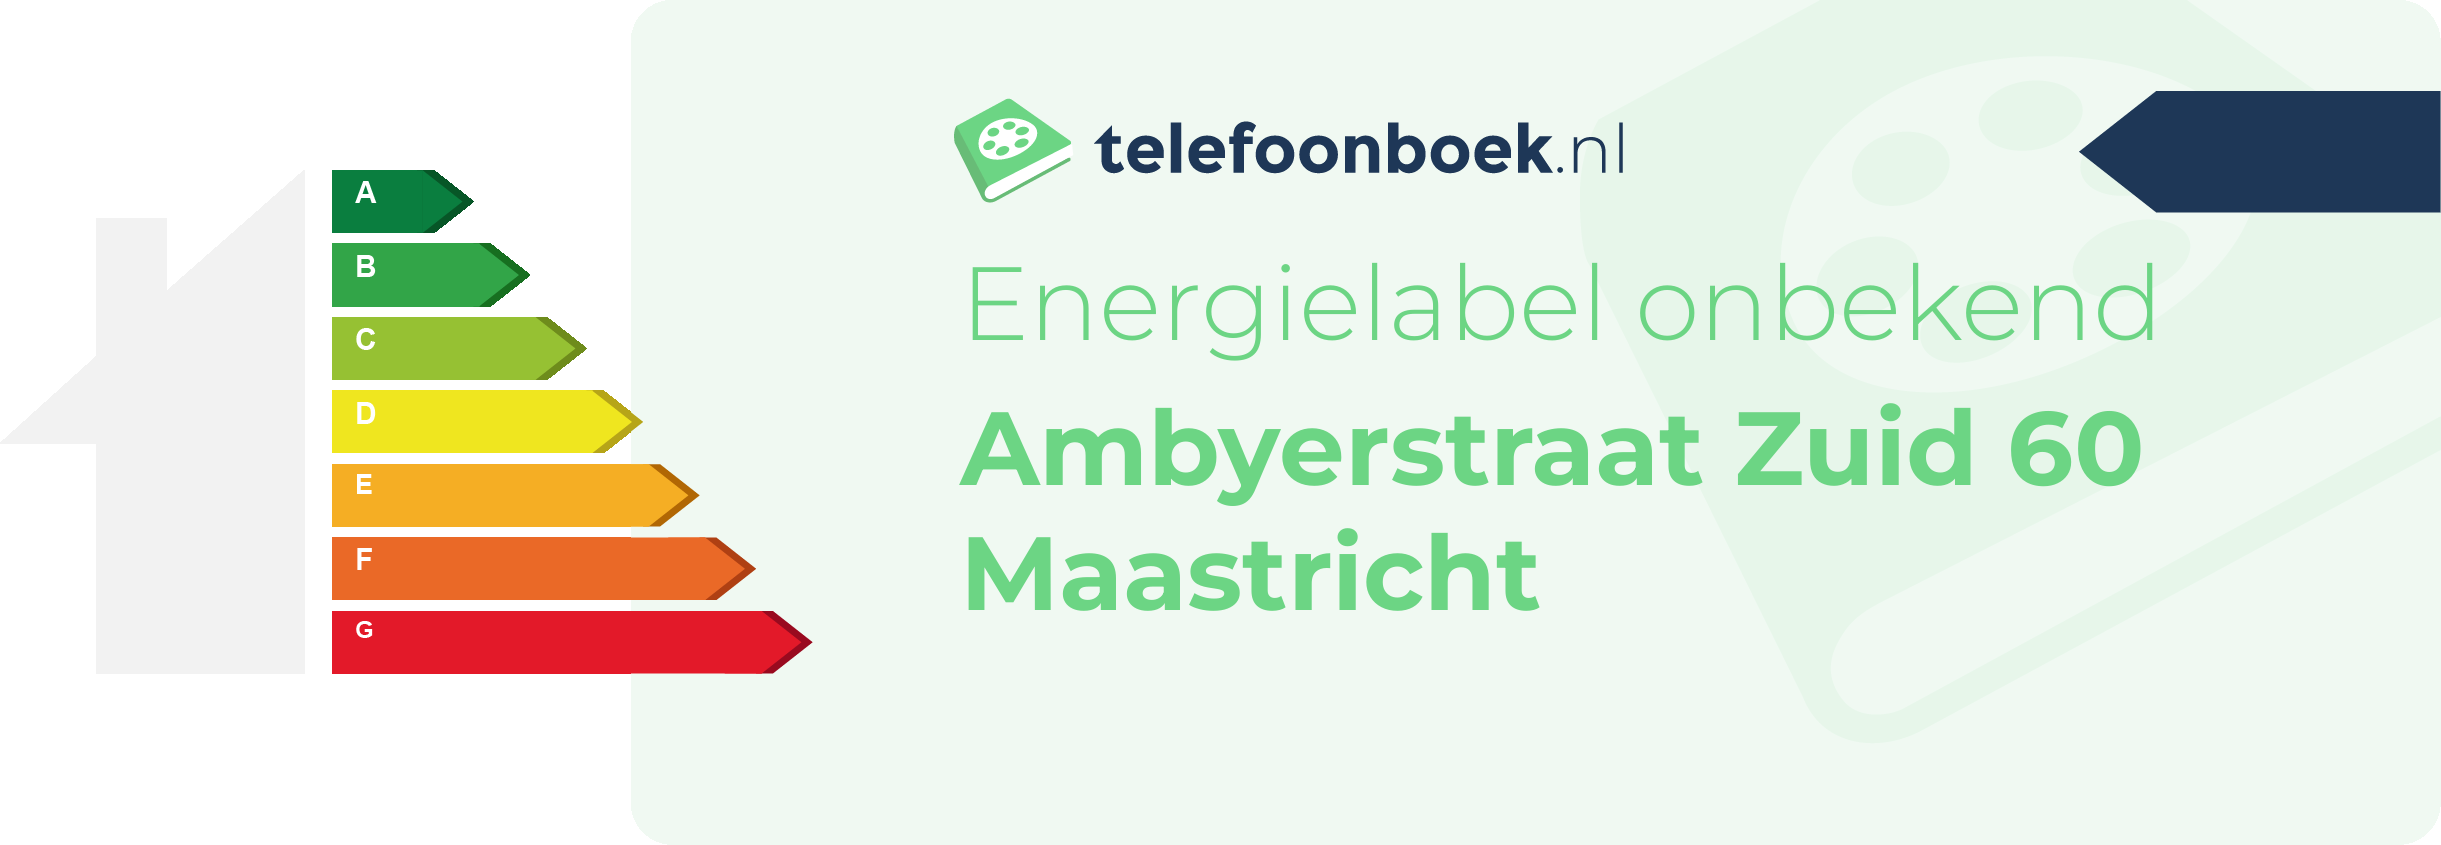 Energielabel Ambyerstraat Zuid 60 Maastricht